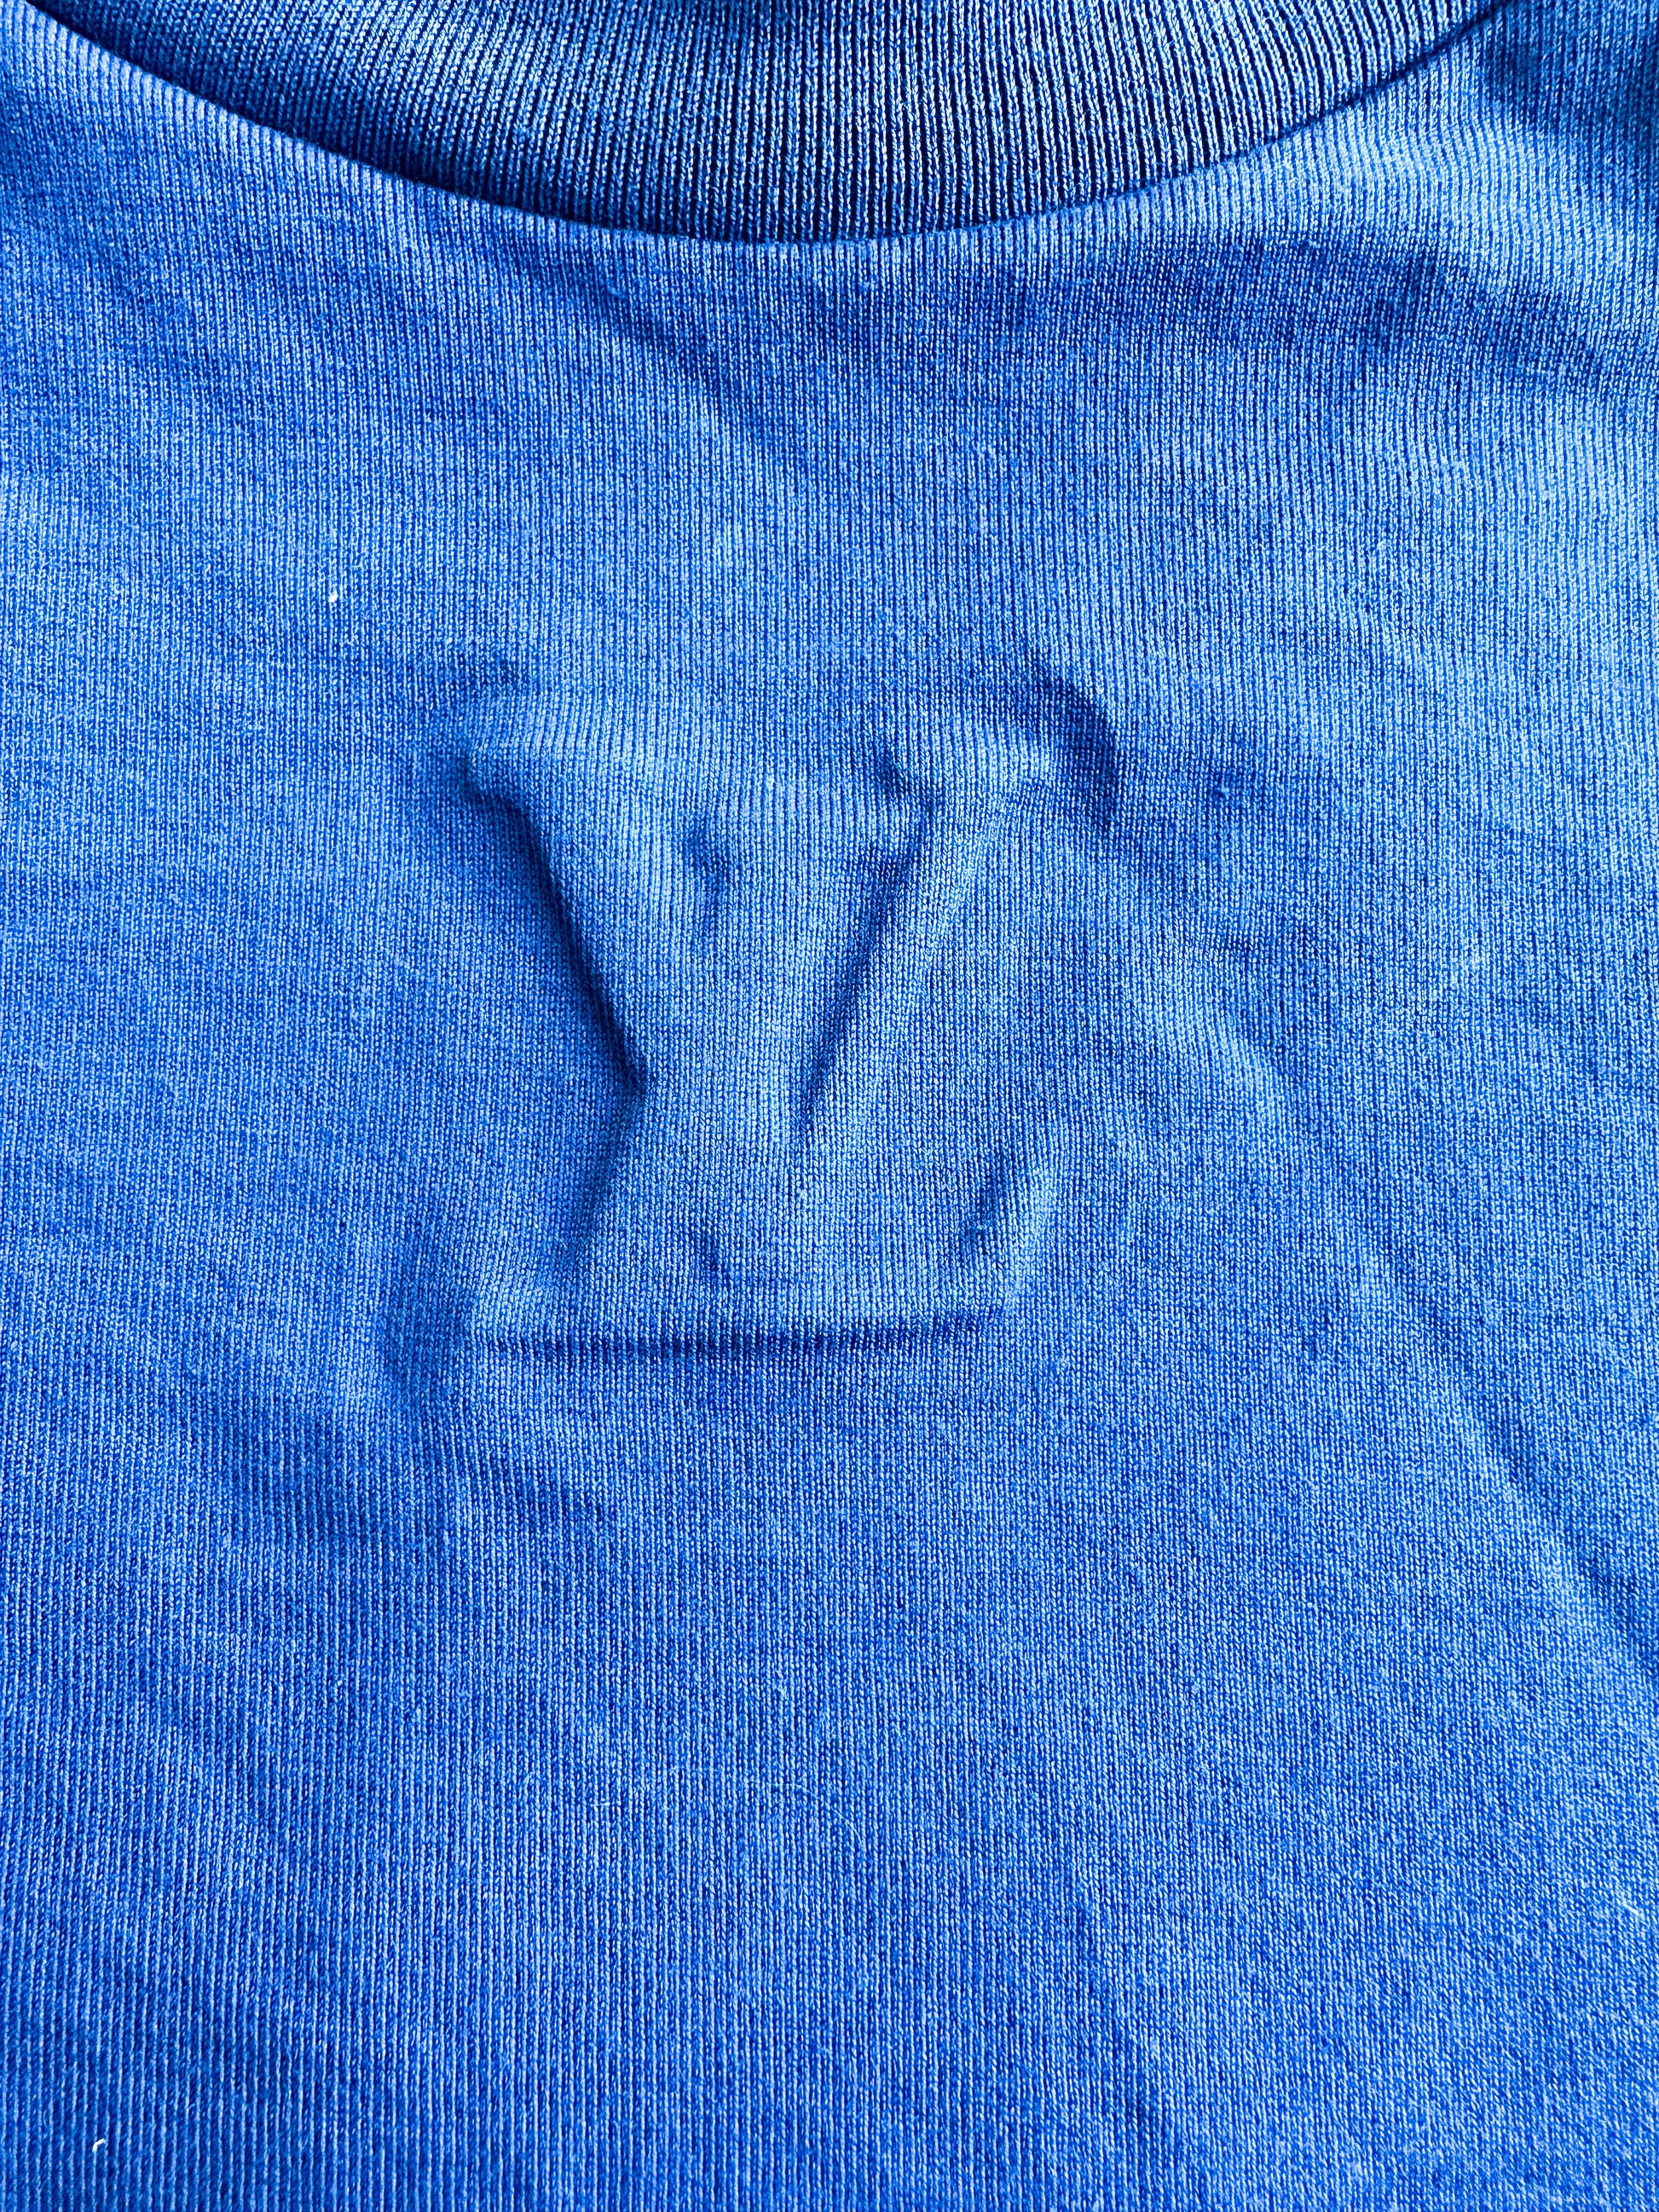 lv shirt blue